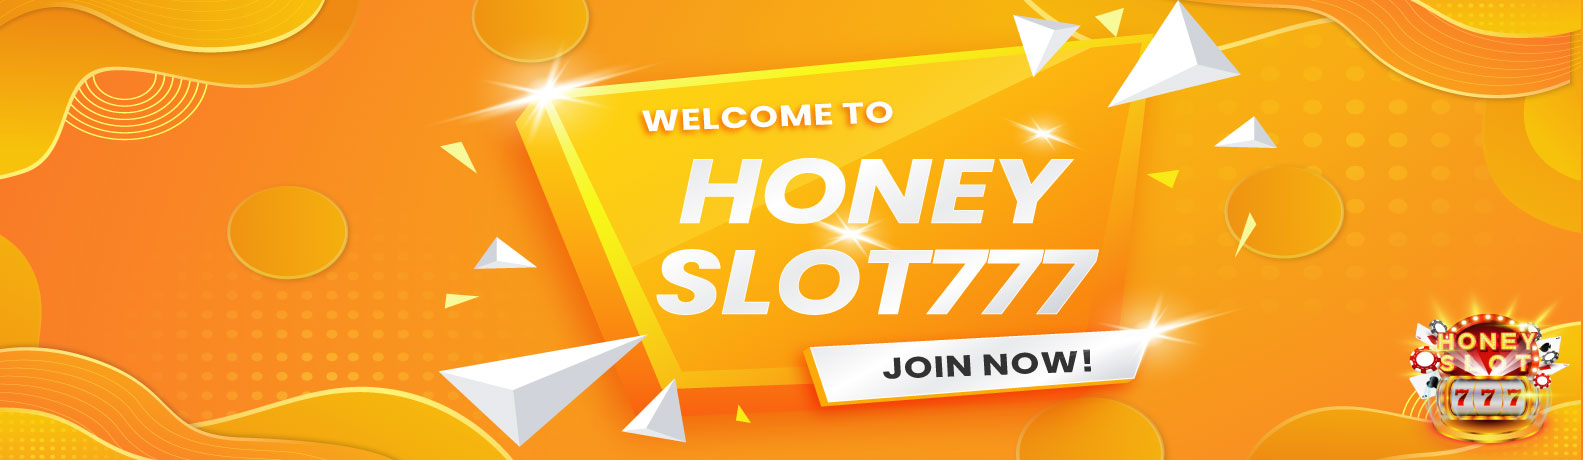 Welcome to HoneySlot777